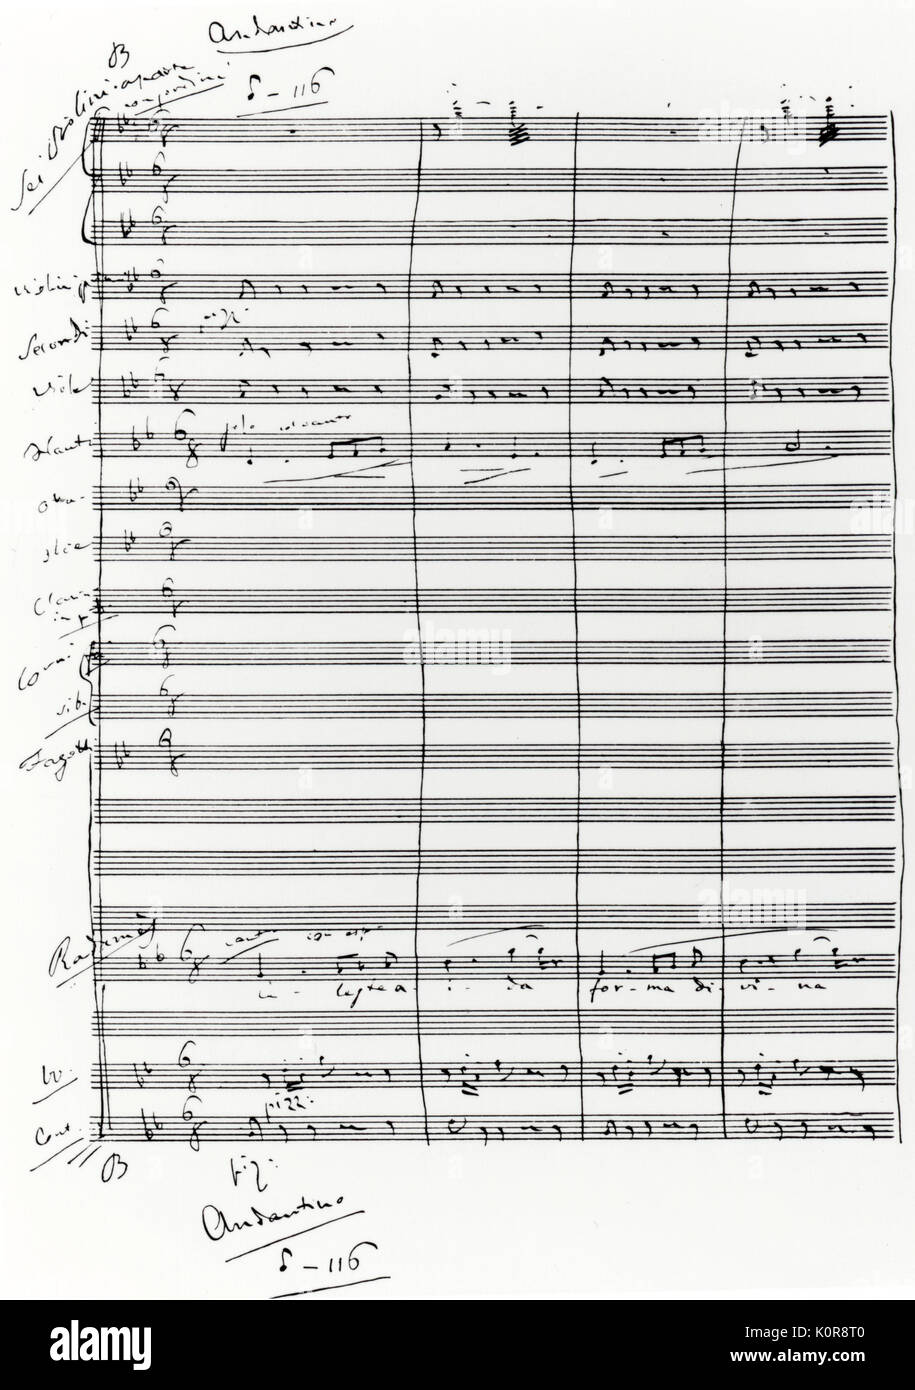 Giuseppe Verdi  - Verdi's handwritten 'Aida' score (Radames to Aida). Italian composer, 9 or 10 October 1813 - 27 January 1901. Stock Photo